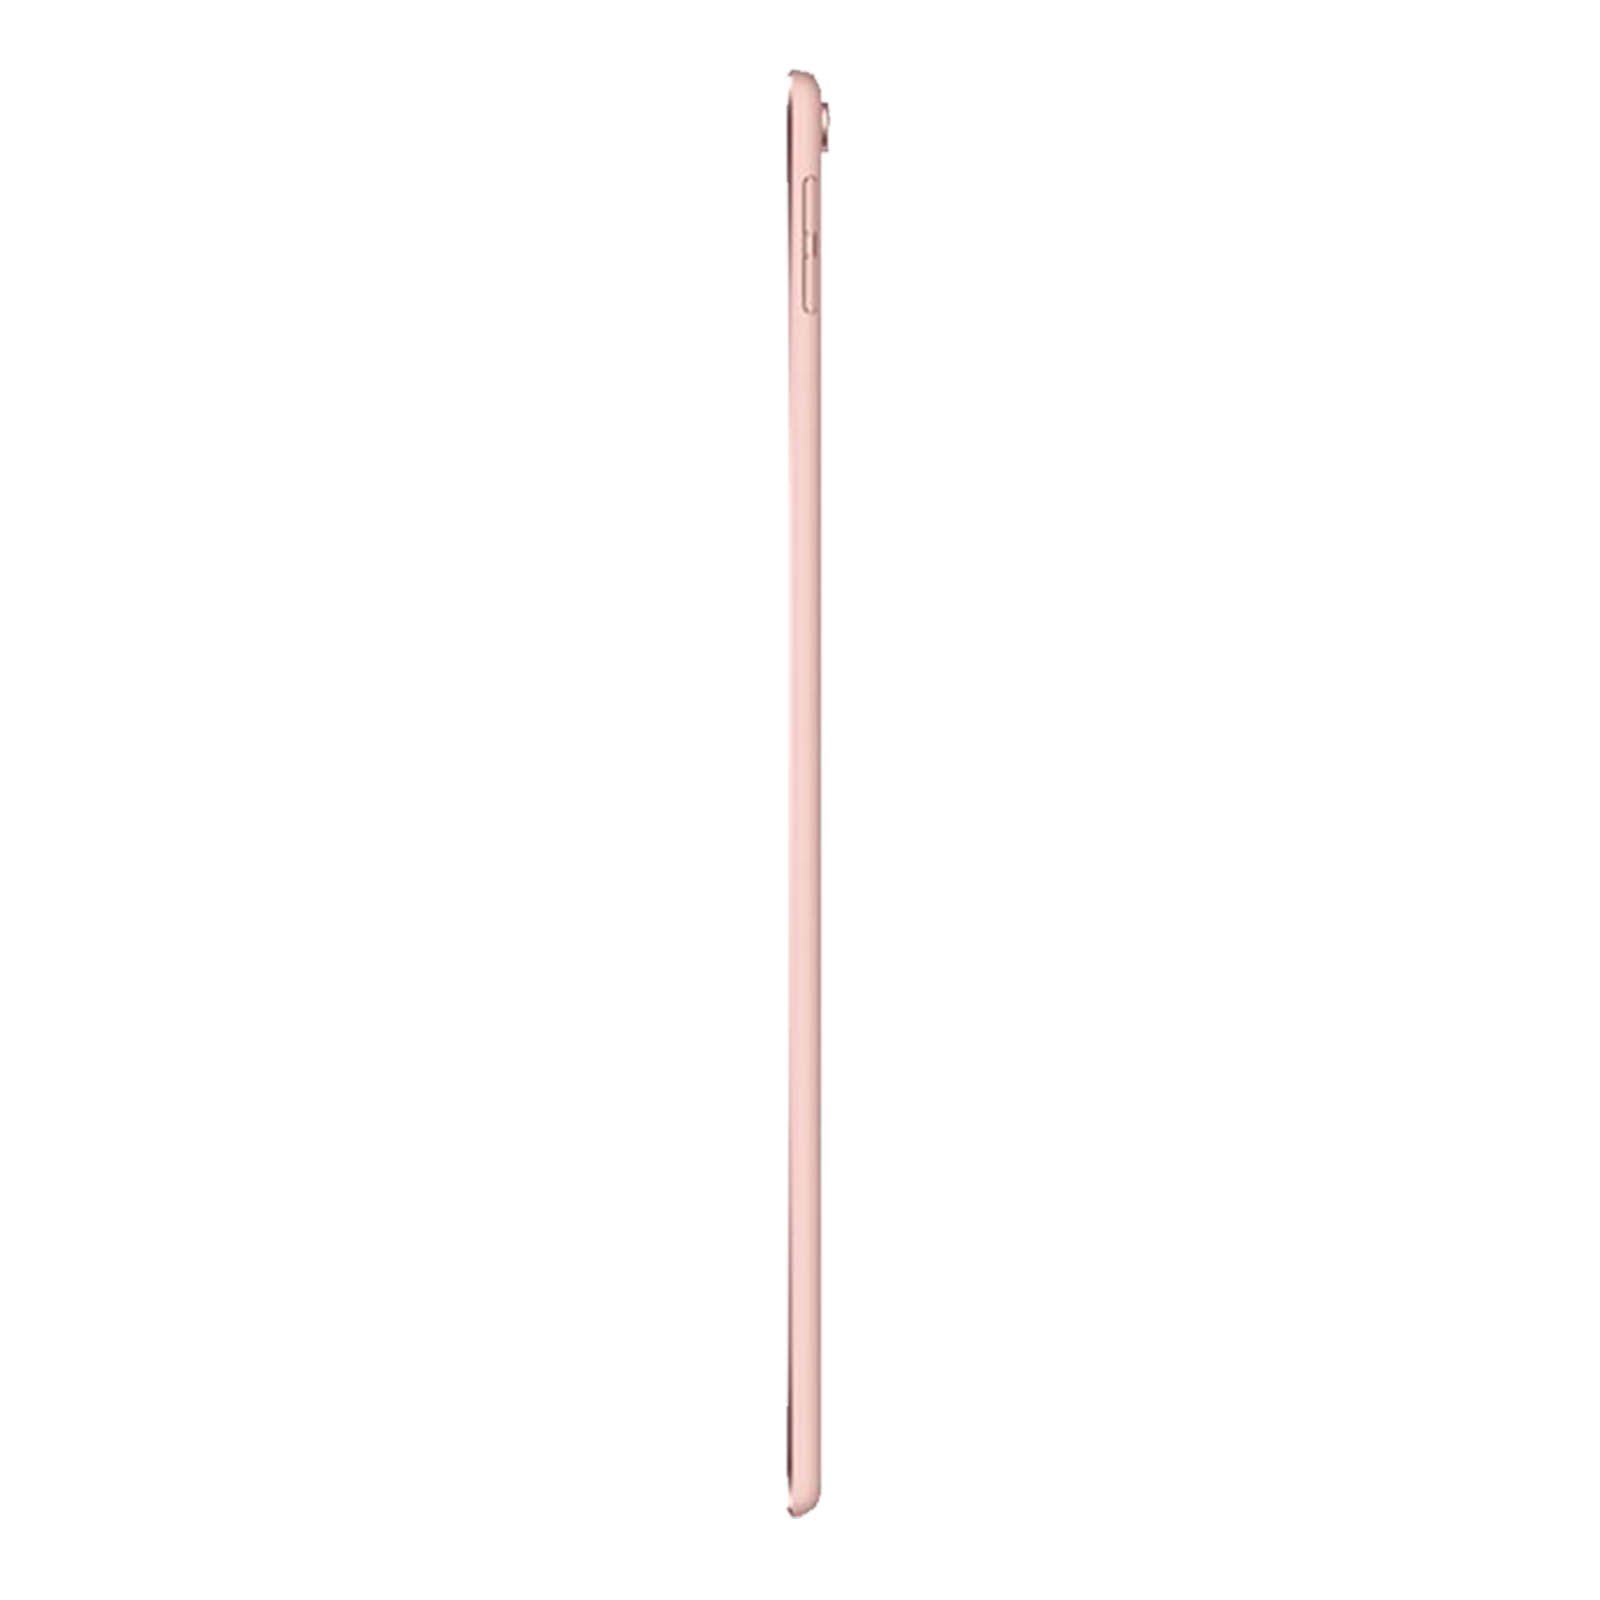 iPad Pro 10.5 Inch 64GB Rose Gold Very Good - Unlocked